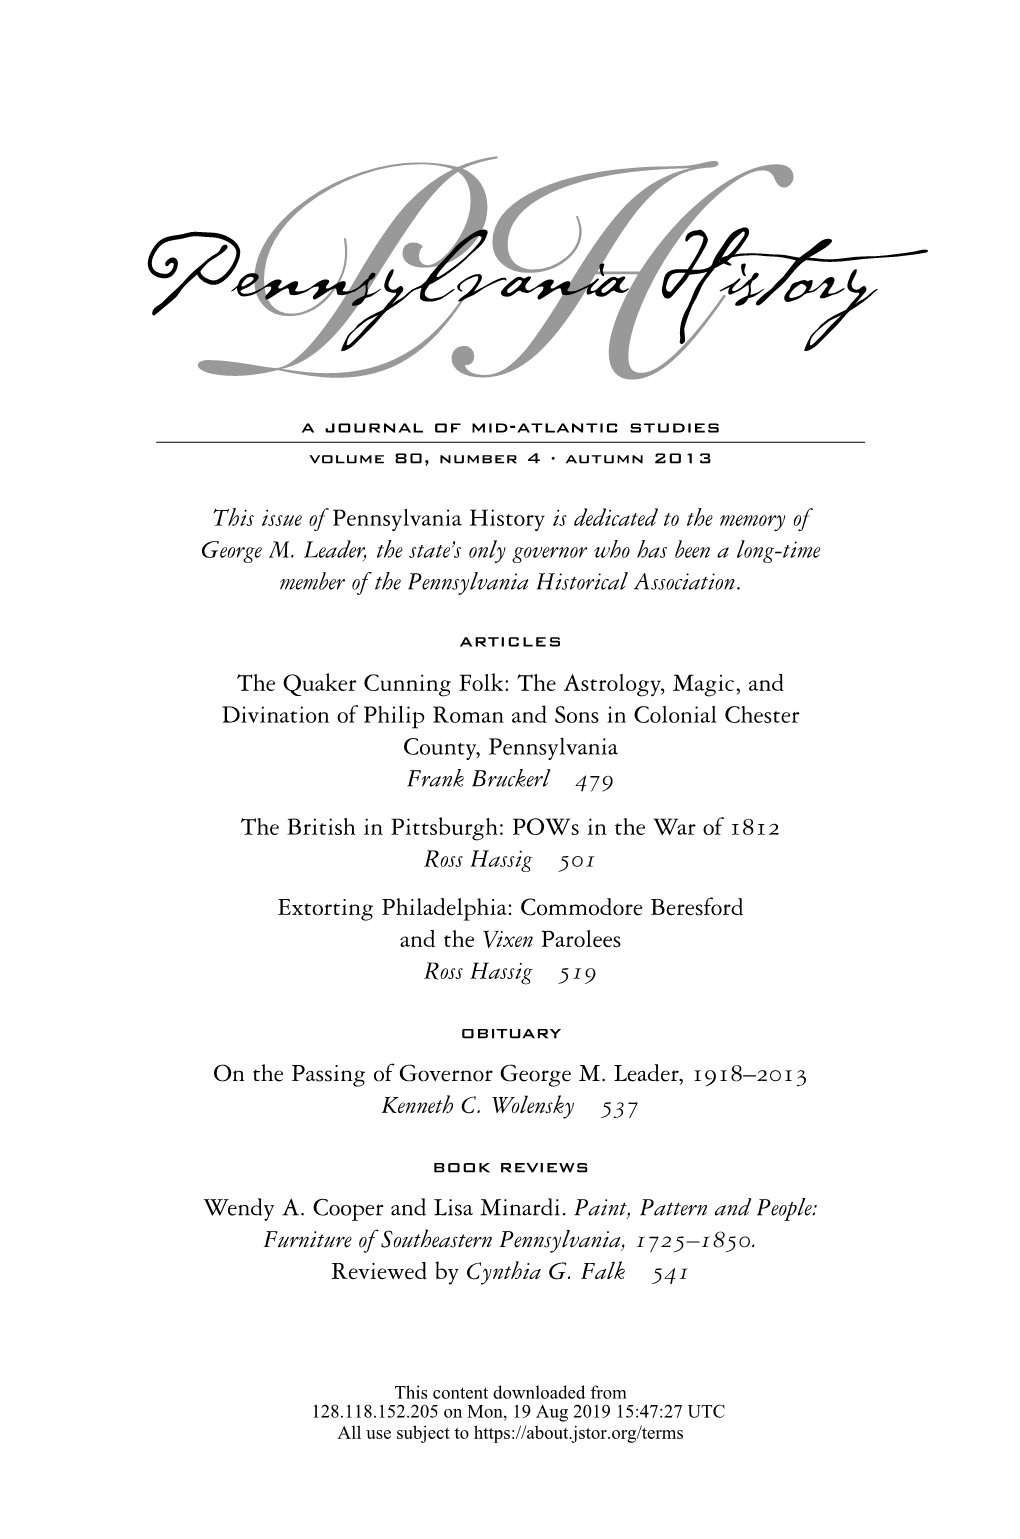 Pennsylvania History: a Journal of Mid-Atlantic Studies Volume 80